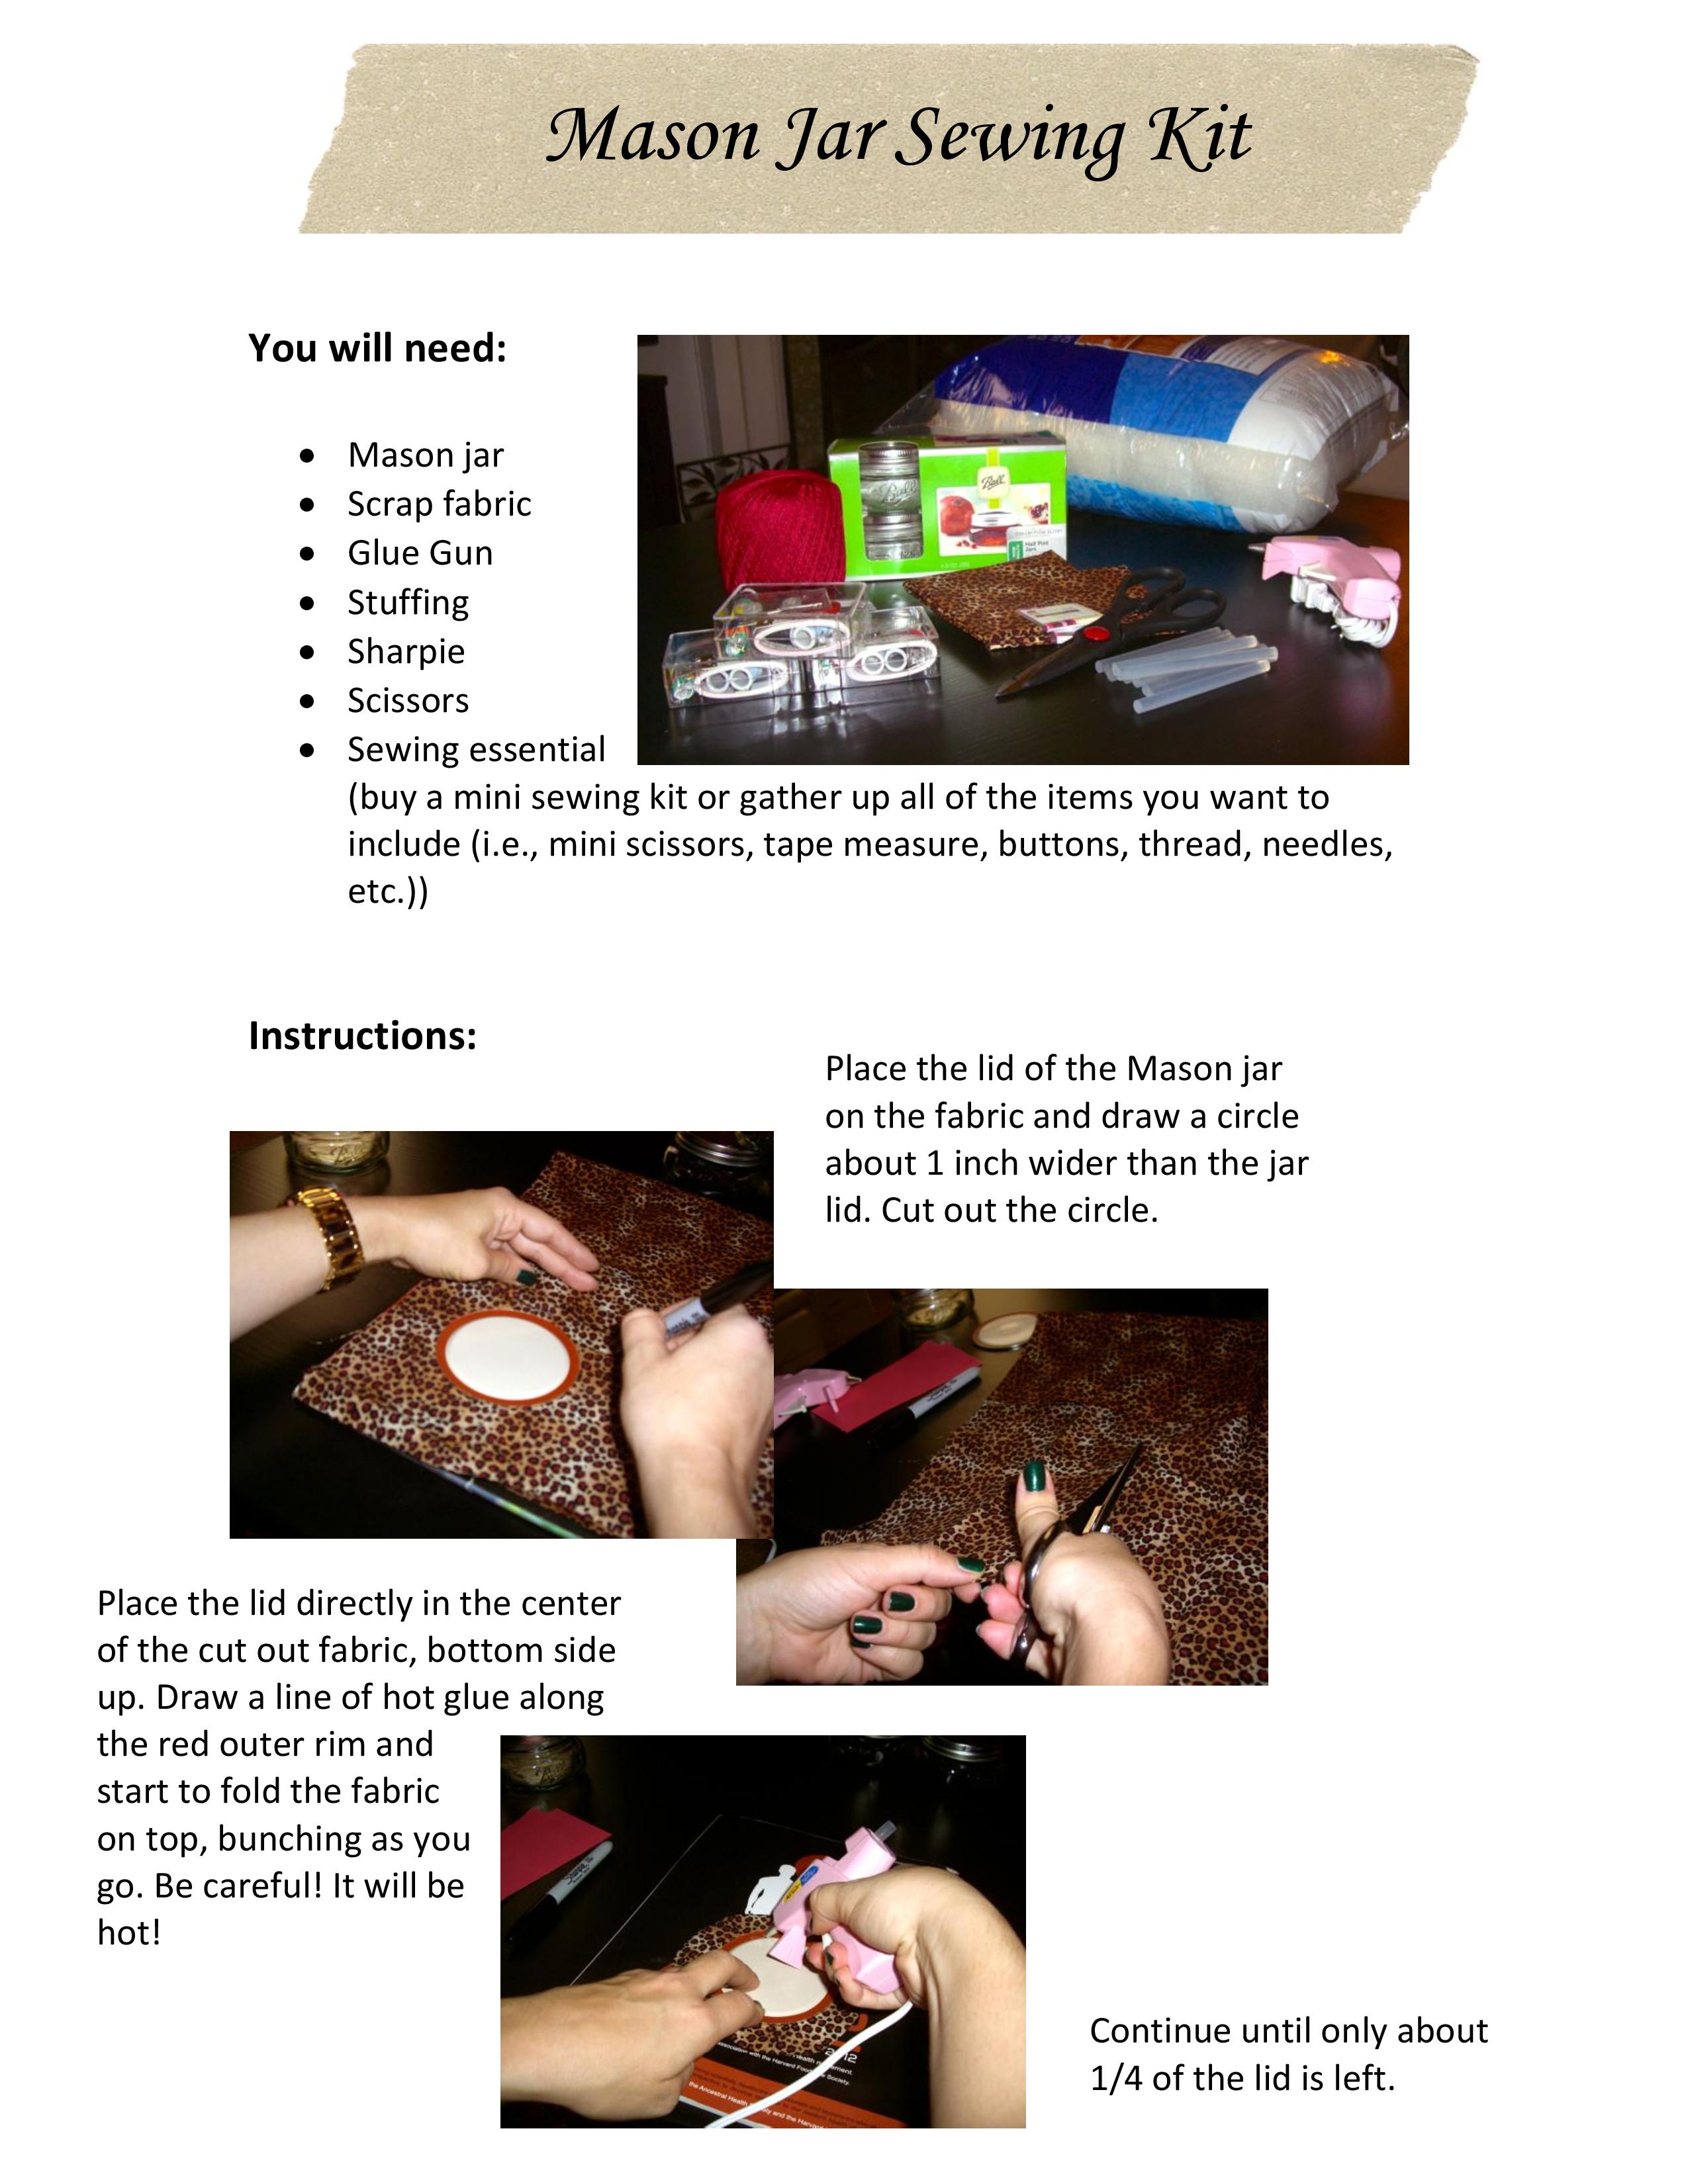 Mason Jar Sewing Kit p1-page-001